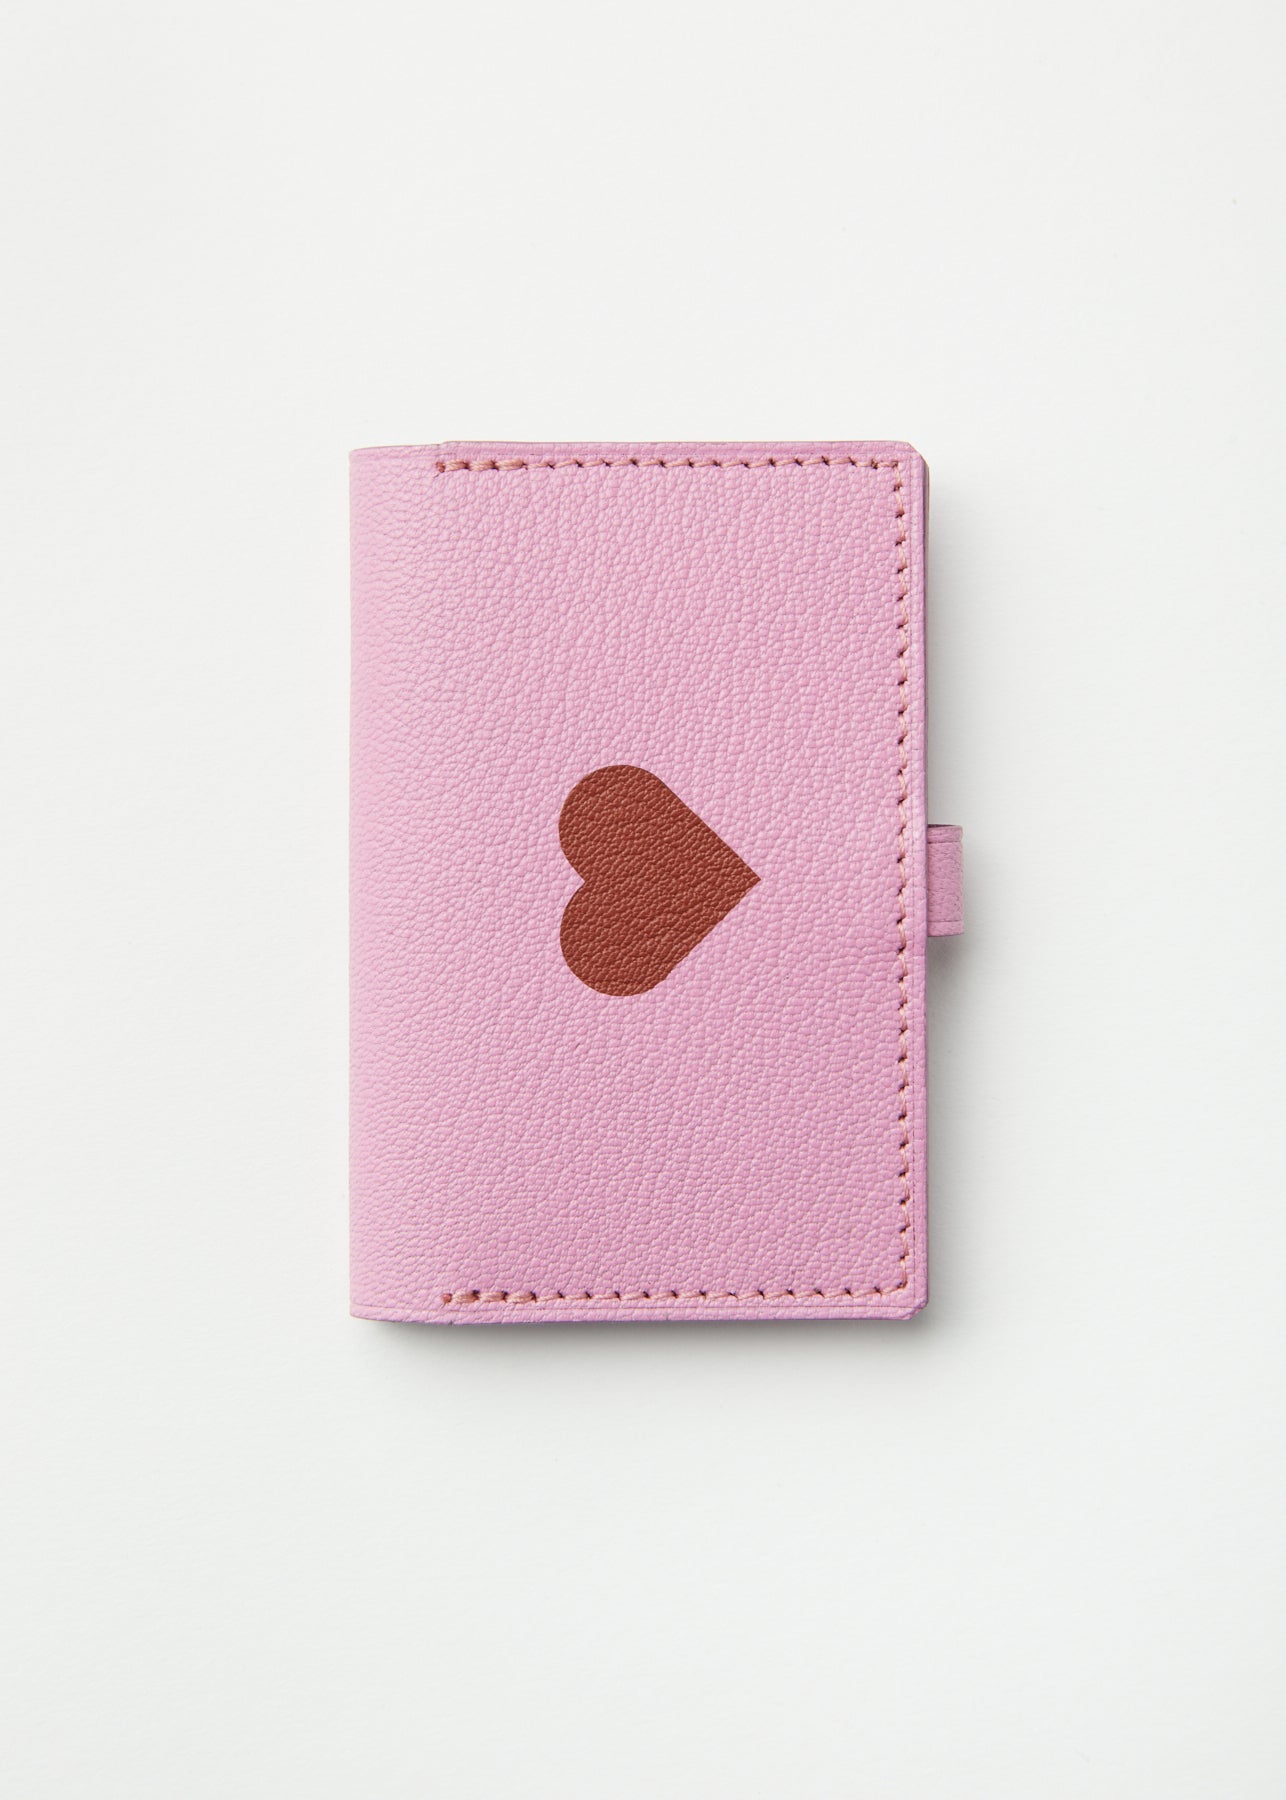 Card Wallet - Brick Heart